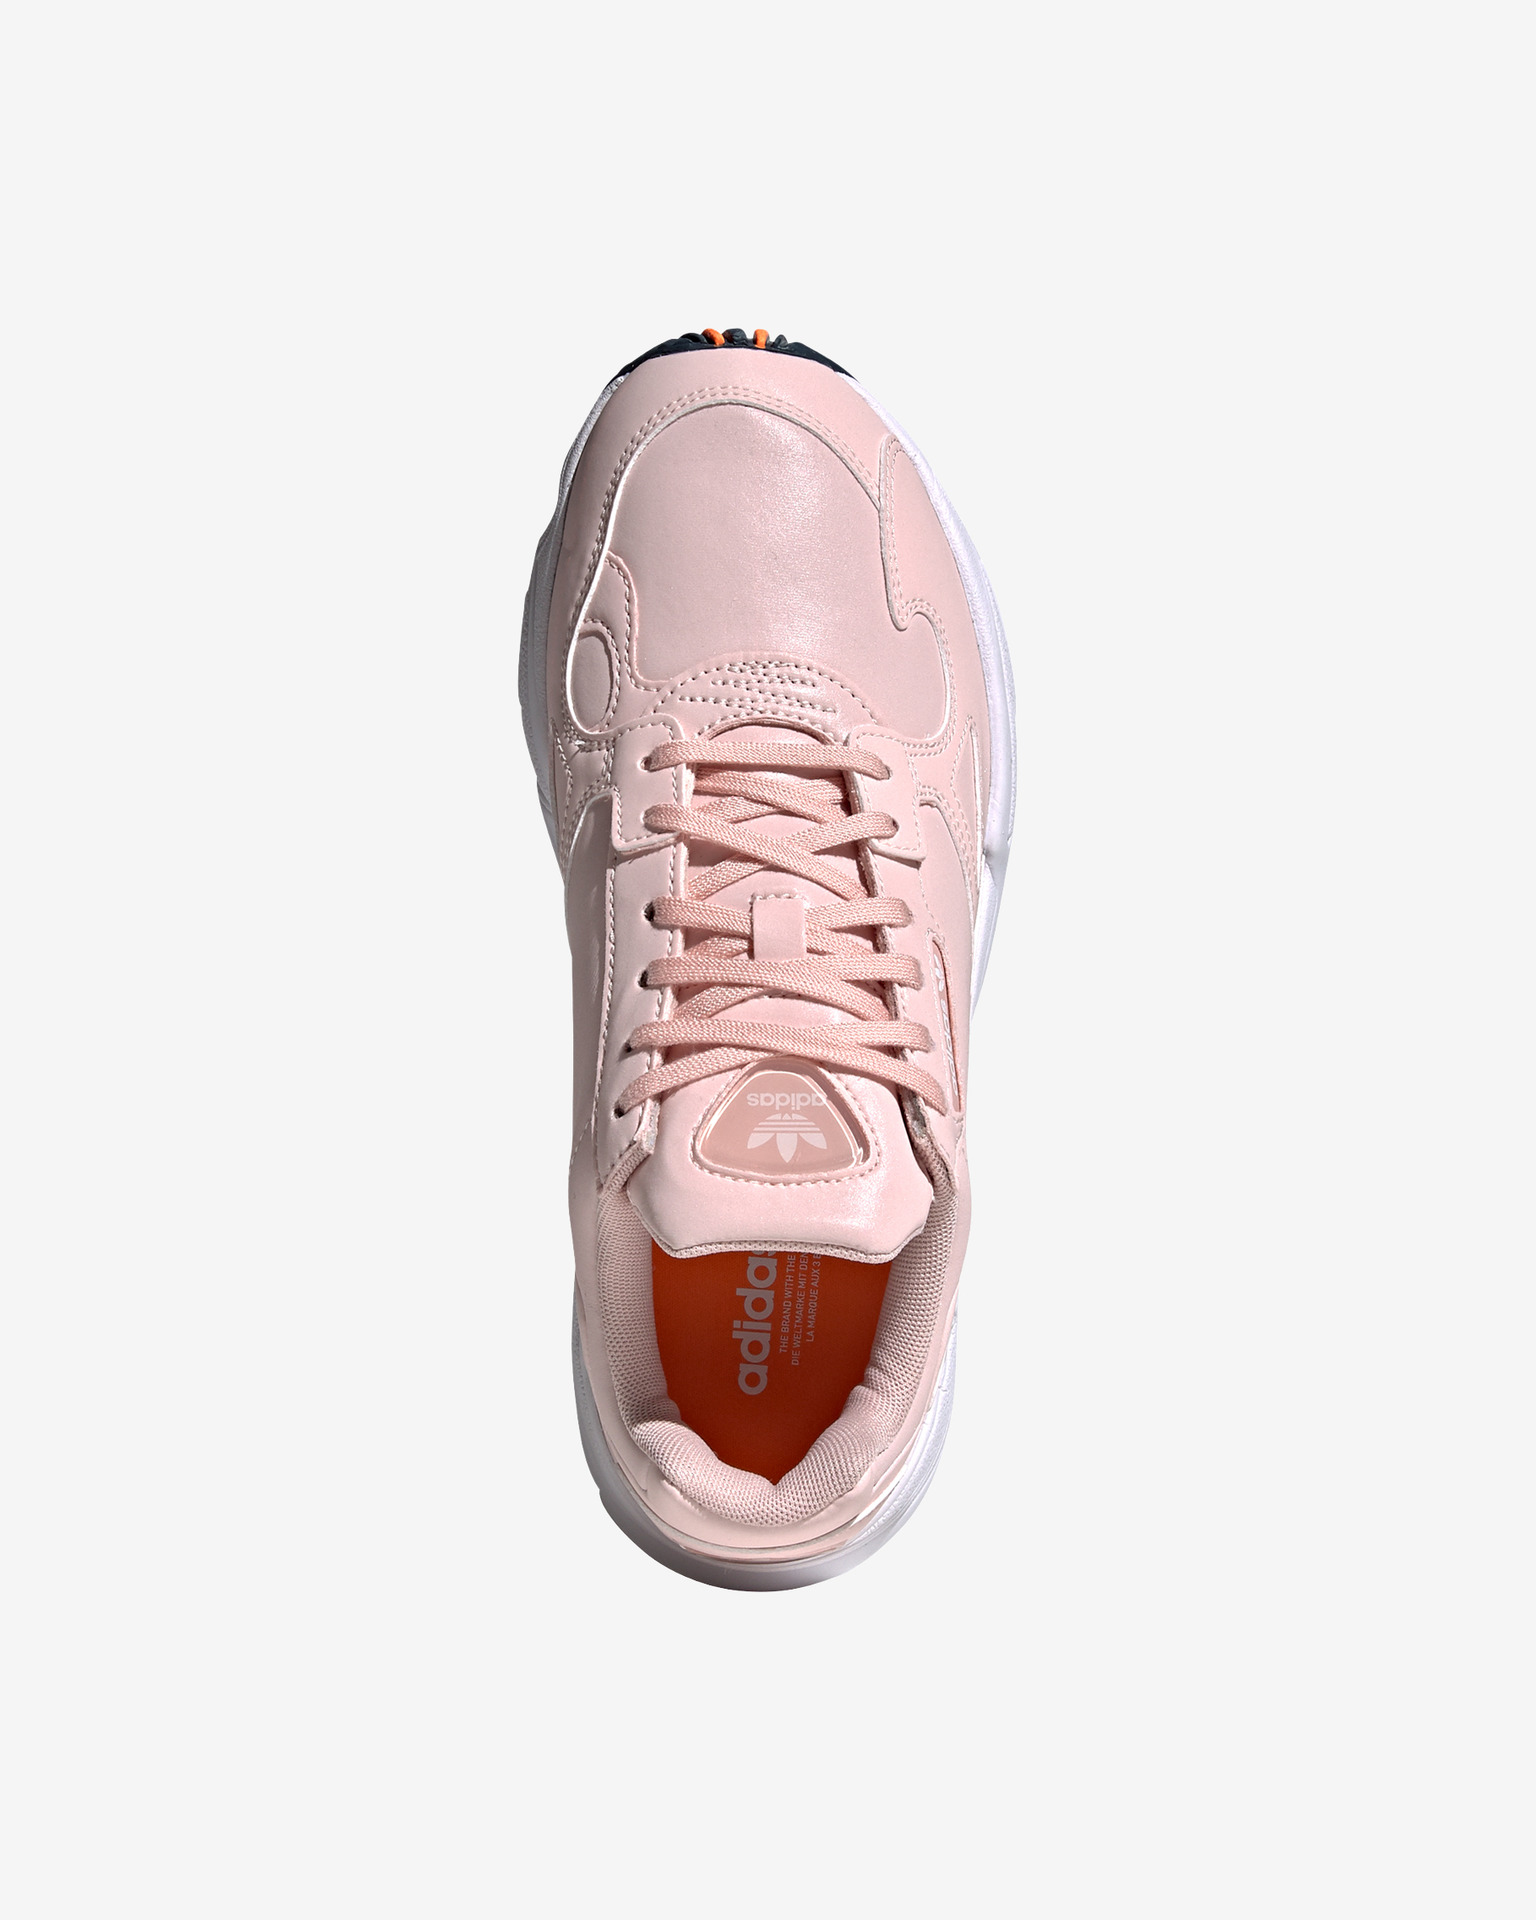 adidas Originals Falcon White Shoes Low Top Sneakers Rare Women Size 6.5US  SALE | eBay